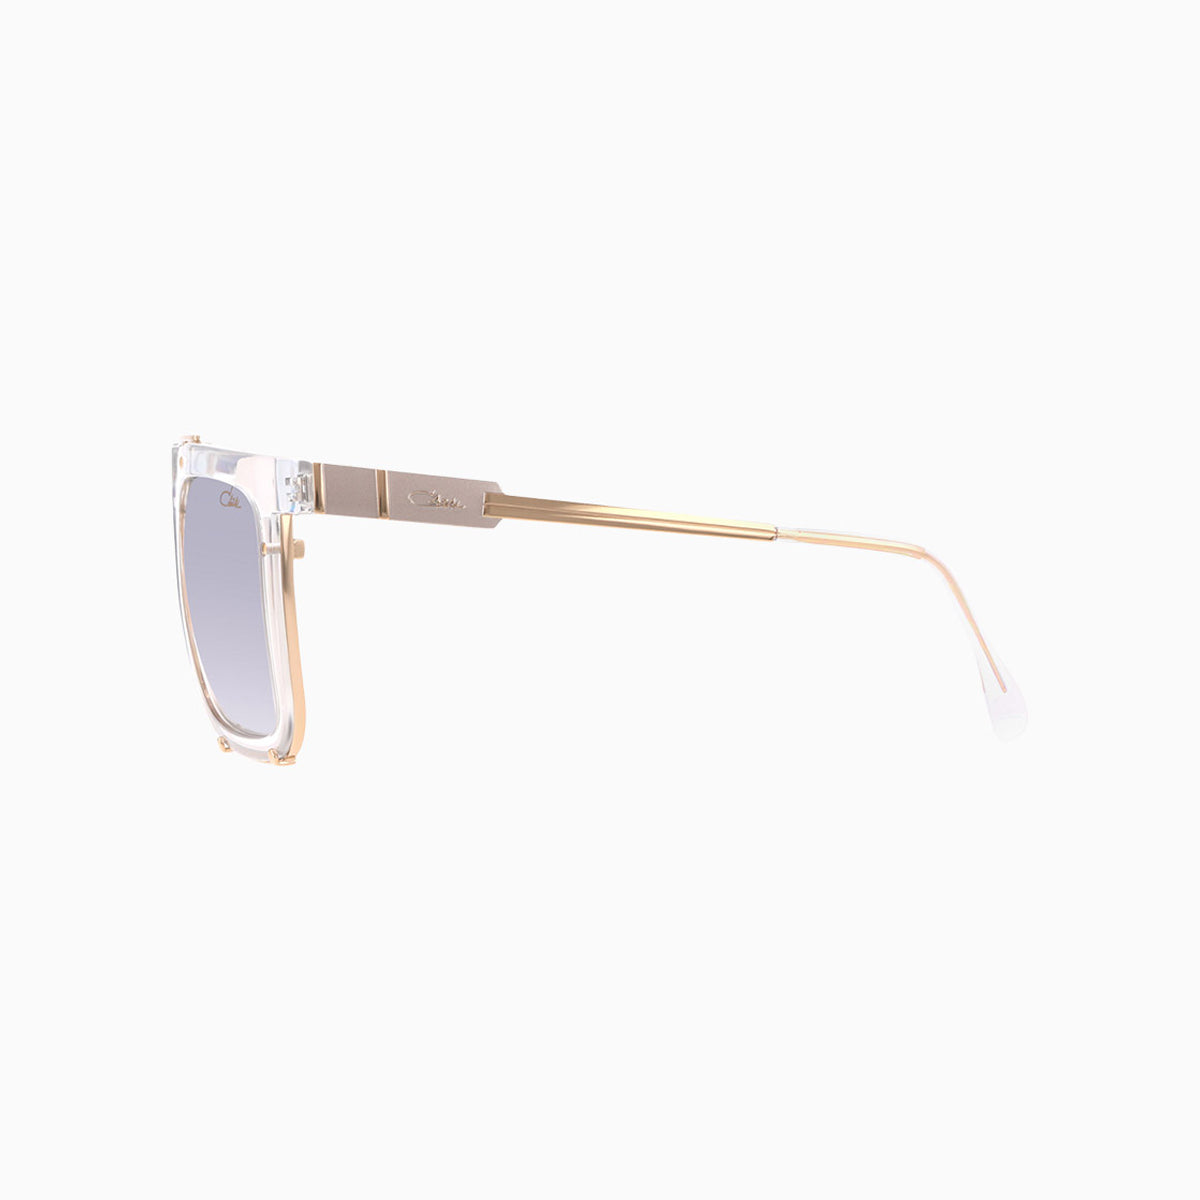 cazal-eyewear-mens-cazal-648-003-gold-silver-sunglasses-cazal648-003